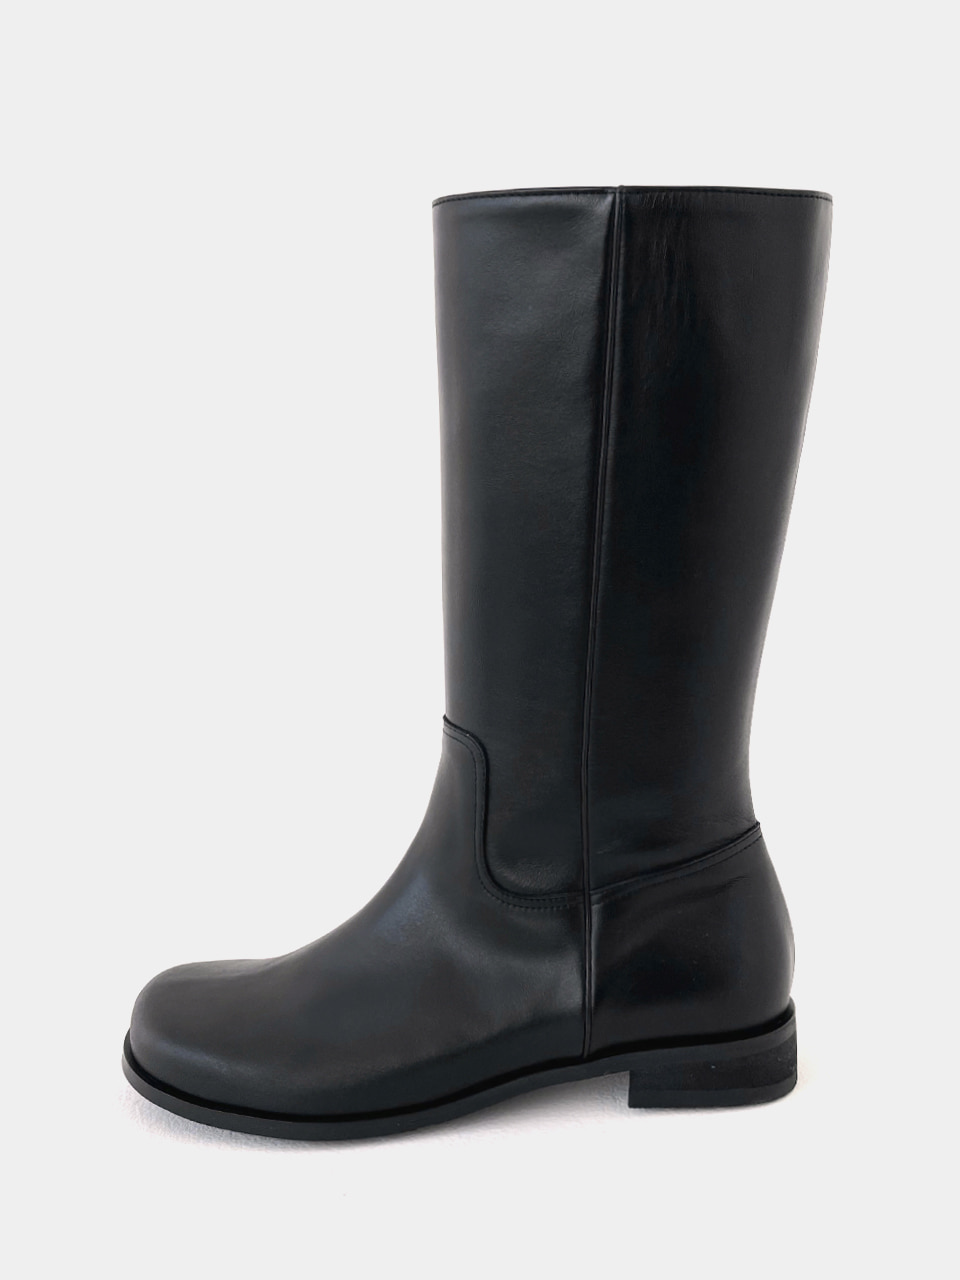 [Out of stock] Mrc093 Diagonal Zipper Long Boots (Black)